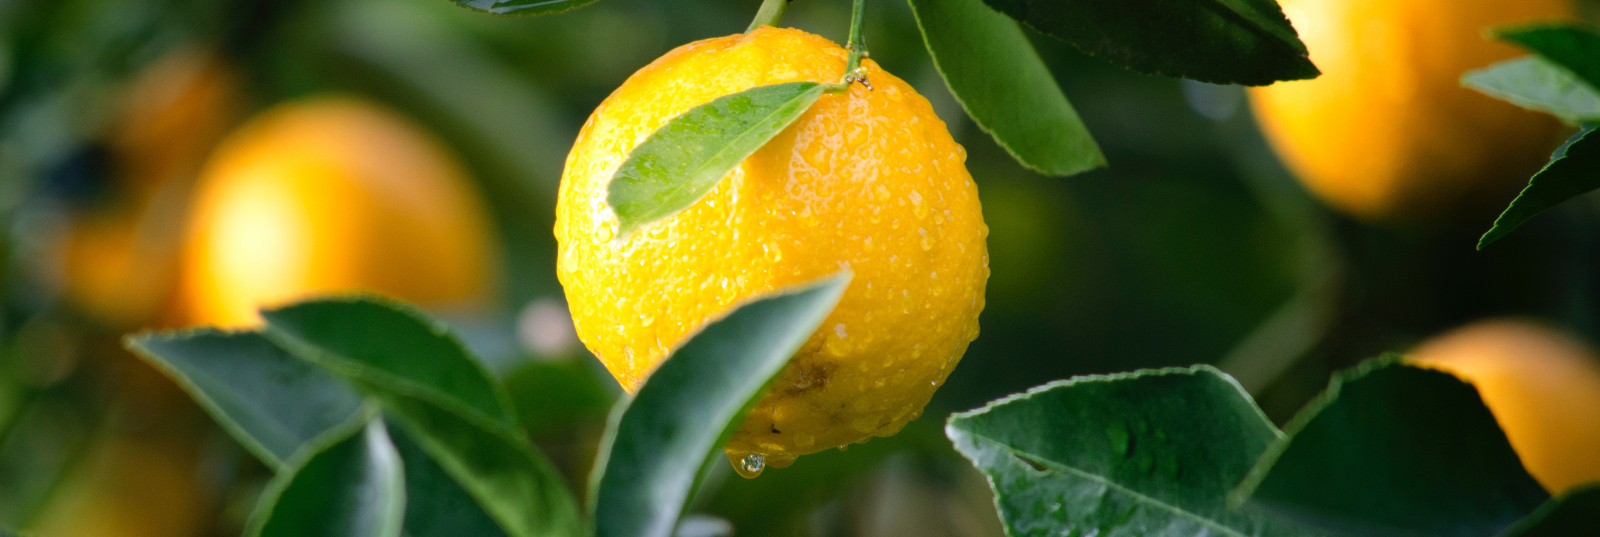 Lemon tree with condensation on the lemons